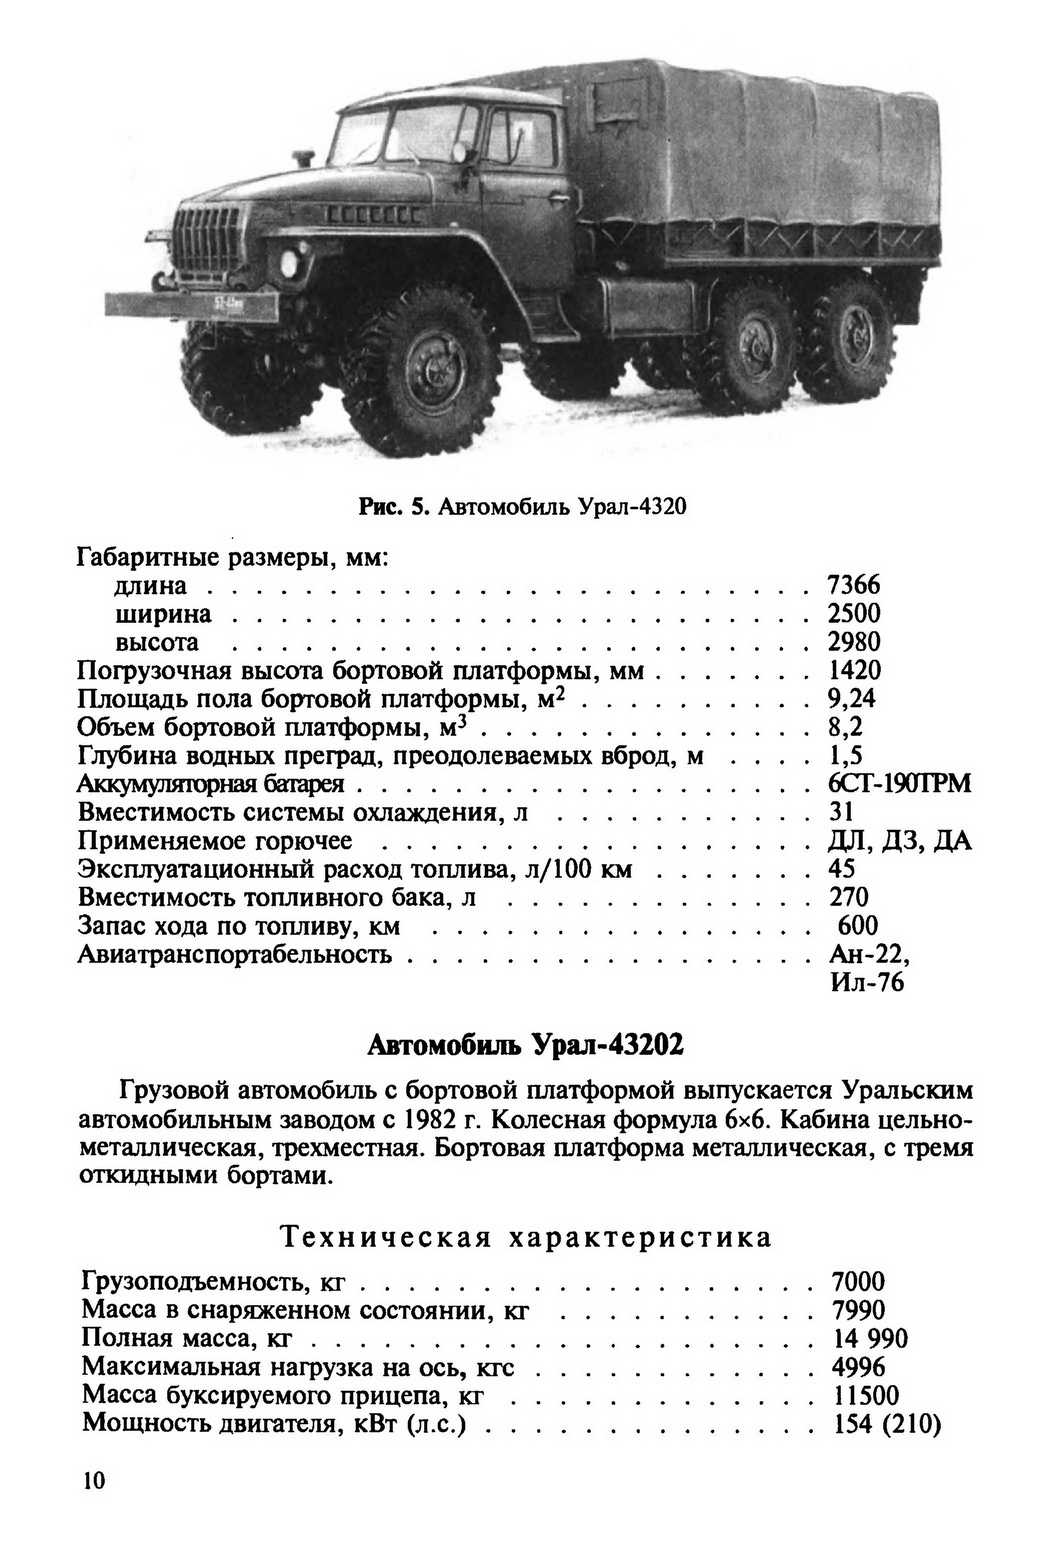 Технические характеристики урал-4320 | грузовик.биз